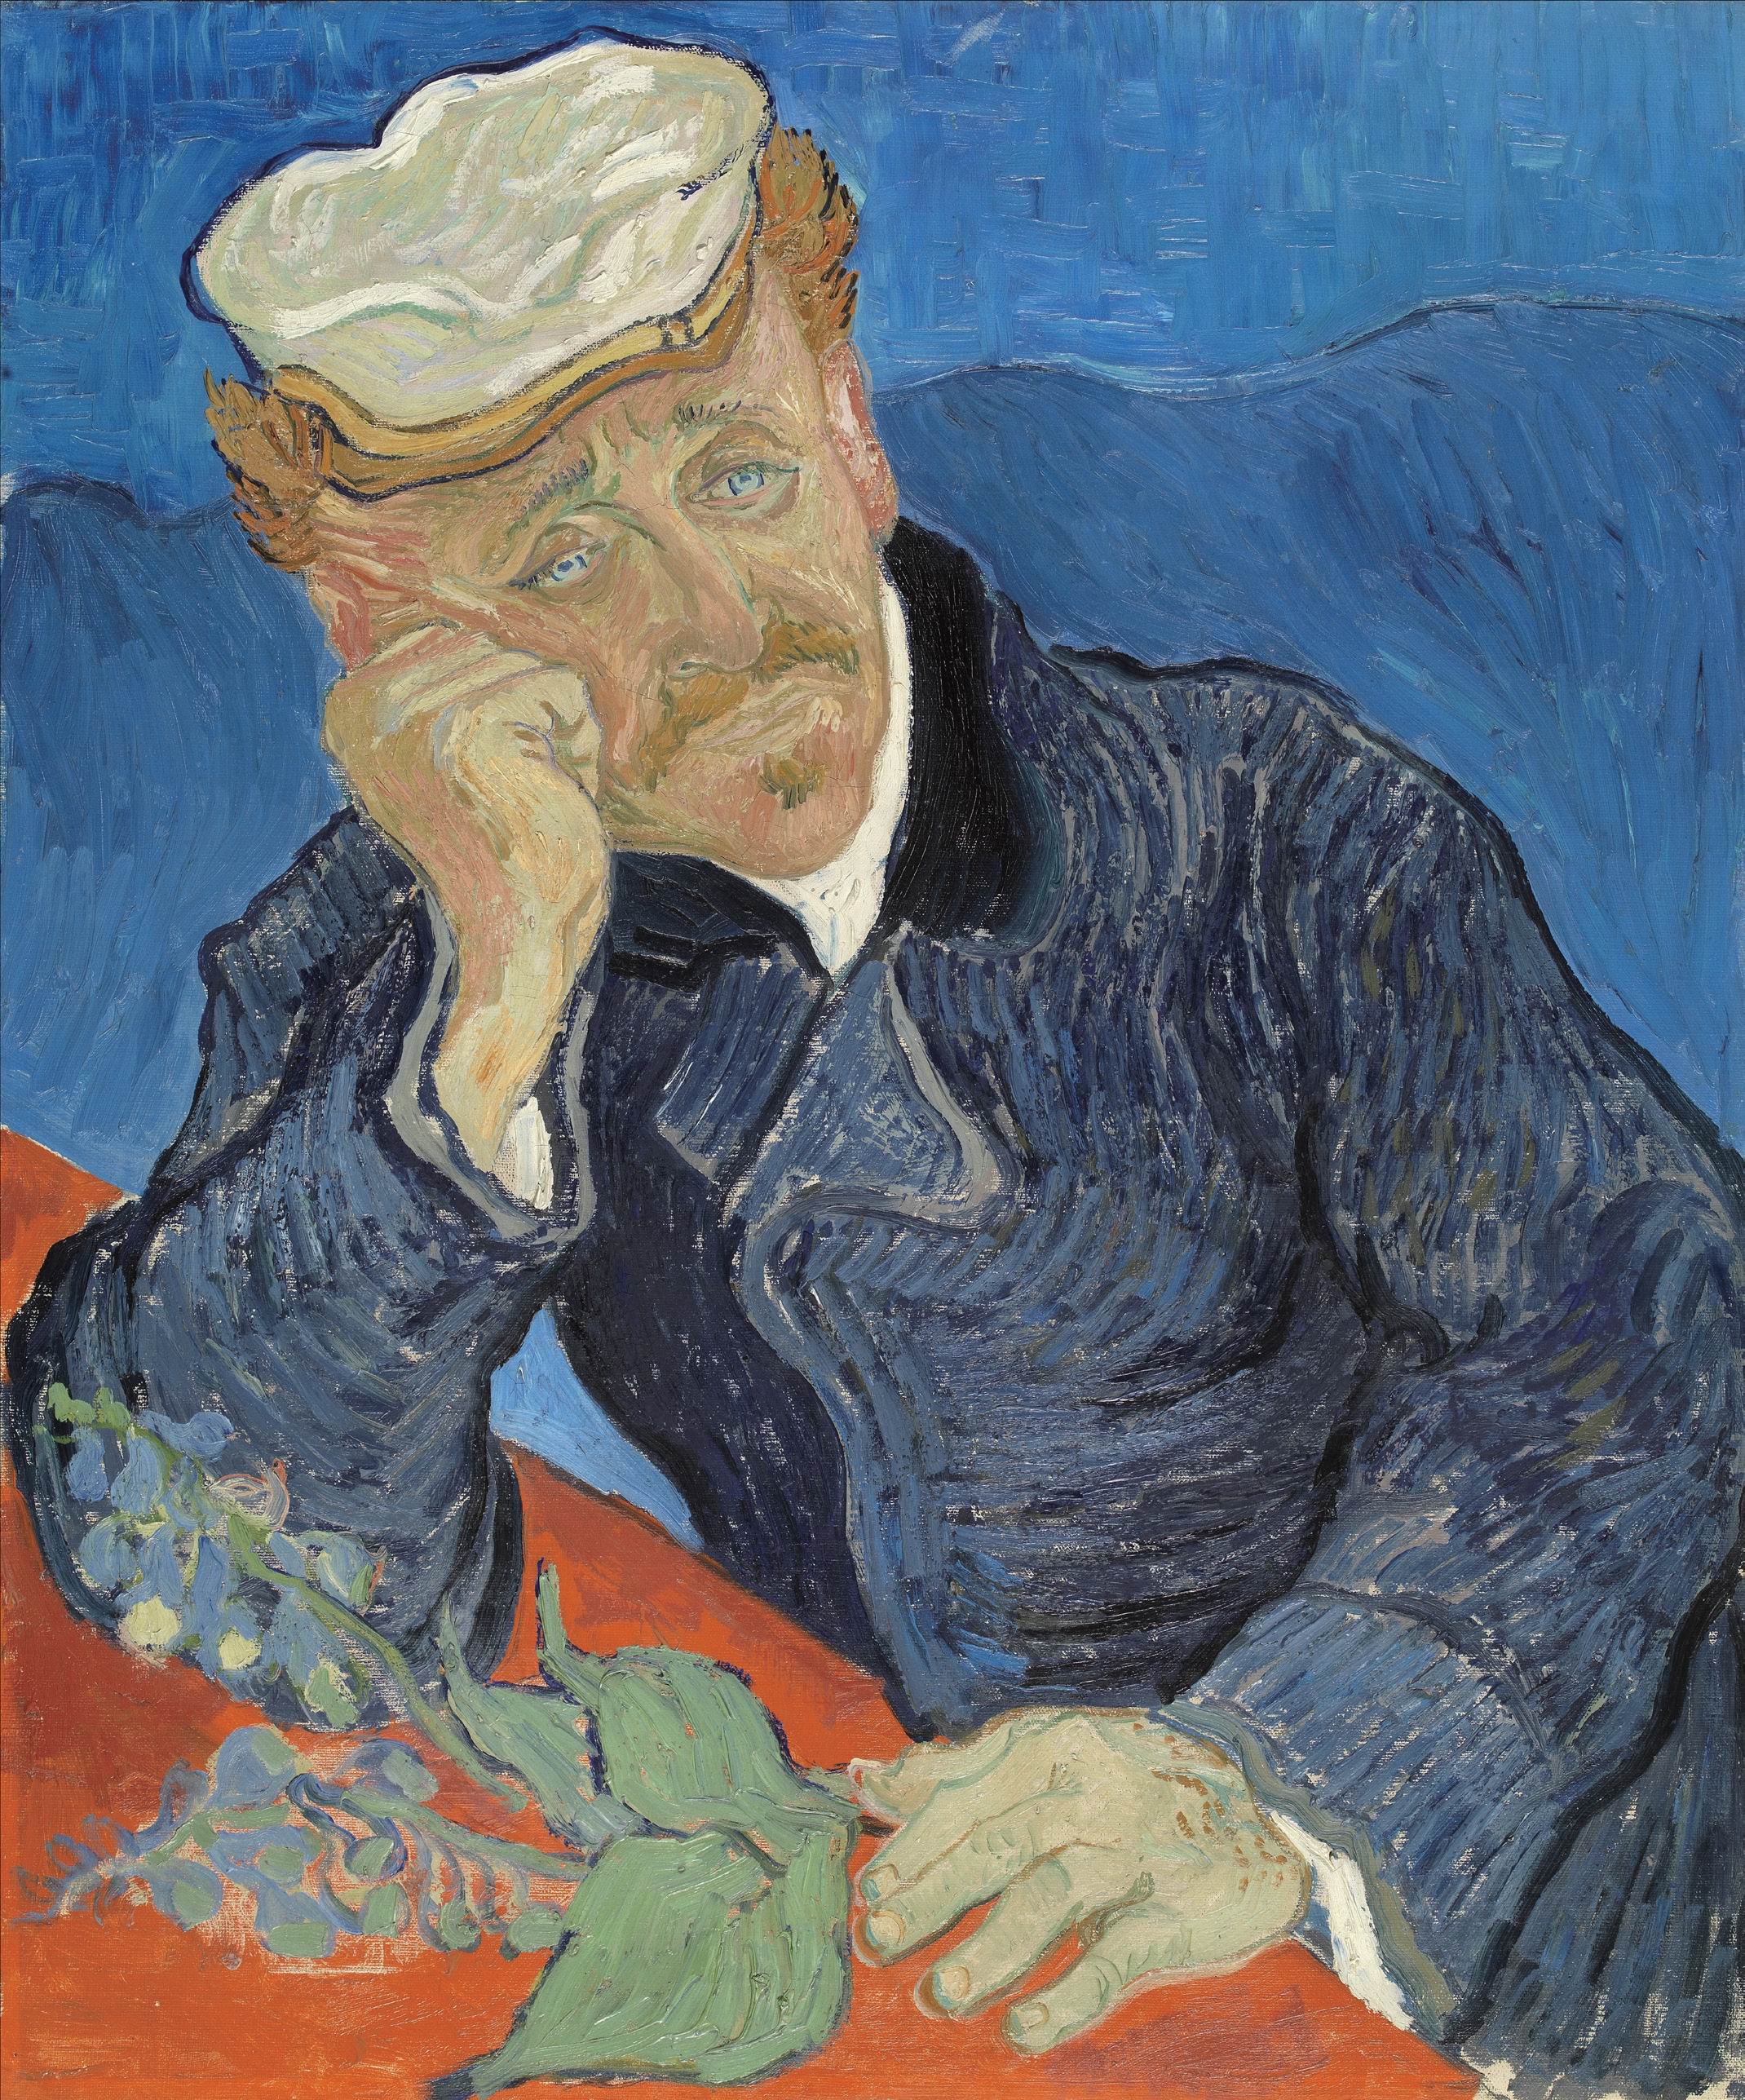 Oil Painting Oil On Canvas Vincent Van Gogh Artwork Men Hand On Face Portrait Display Frown Moustach 2140x2575